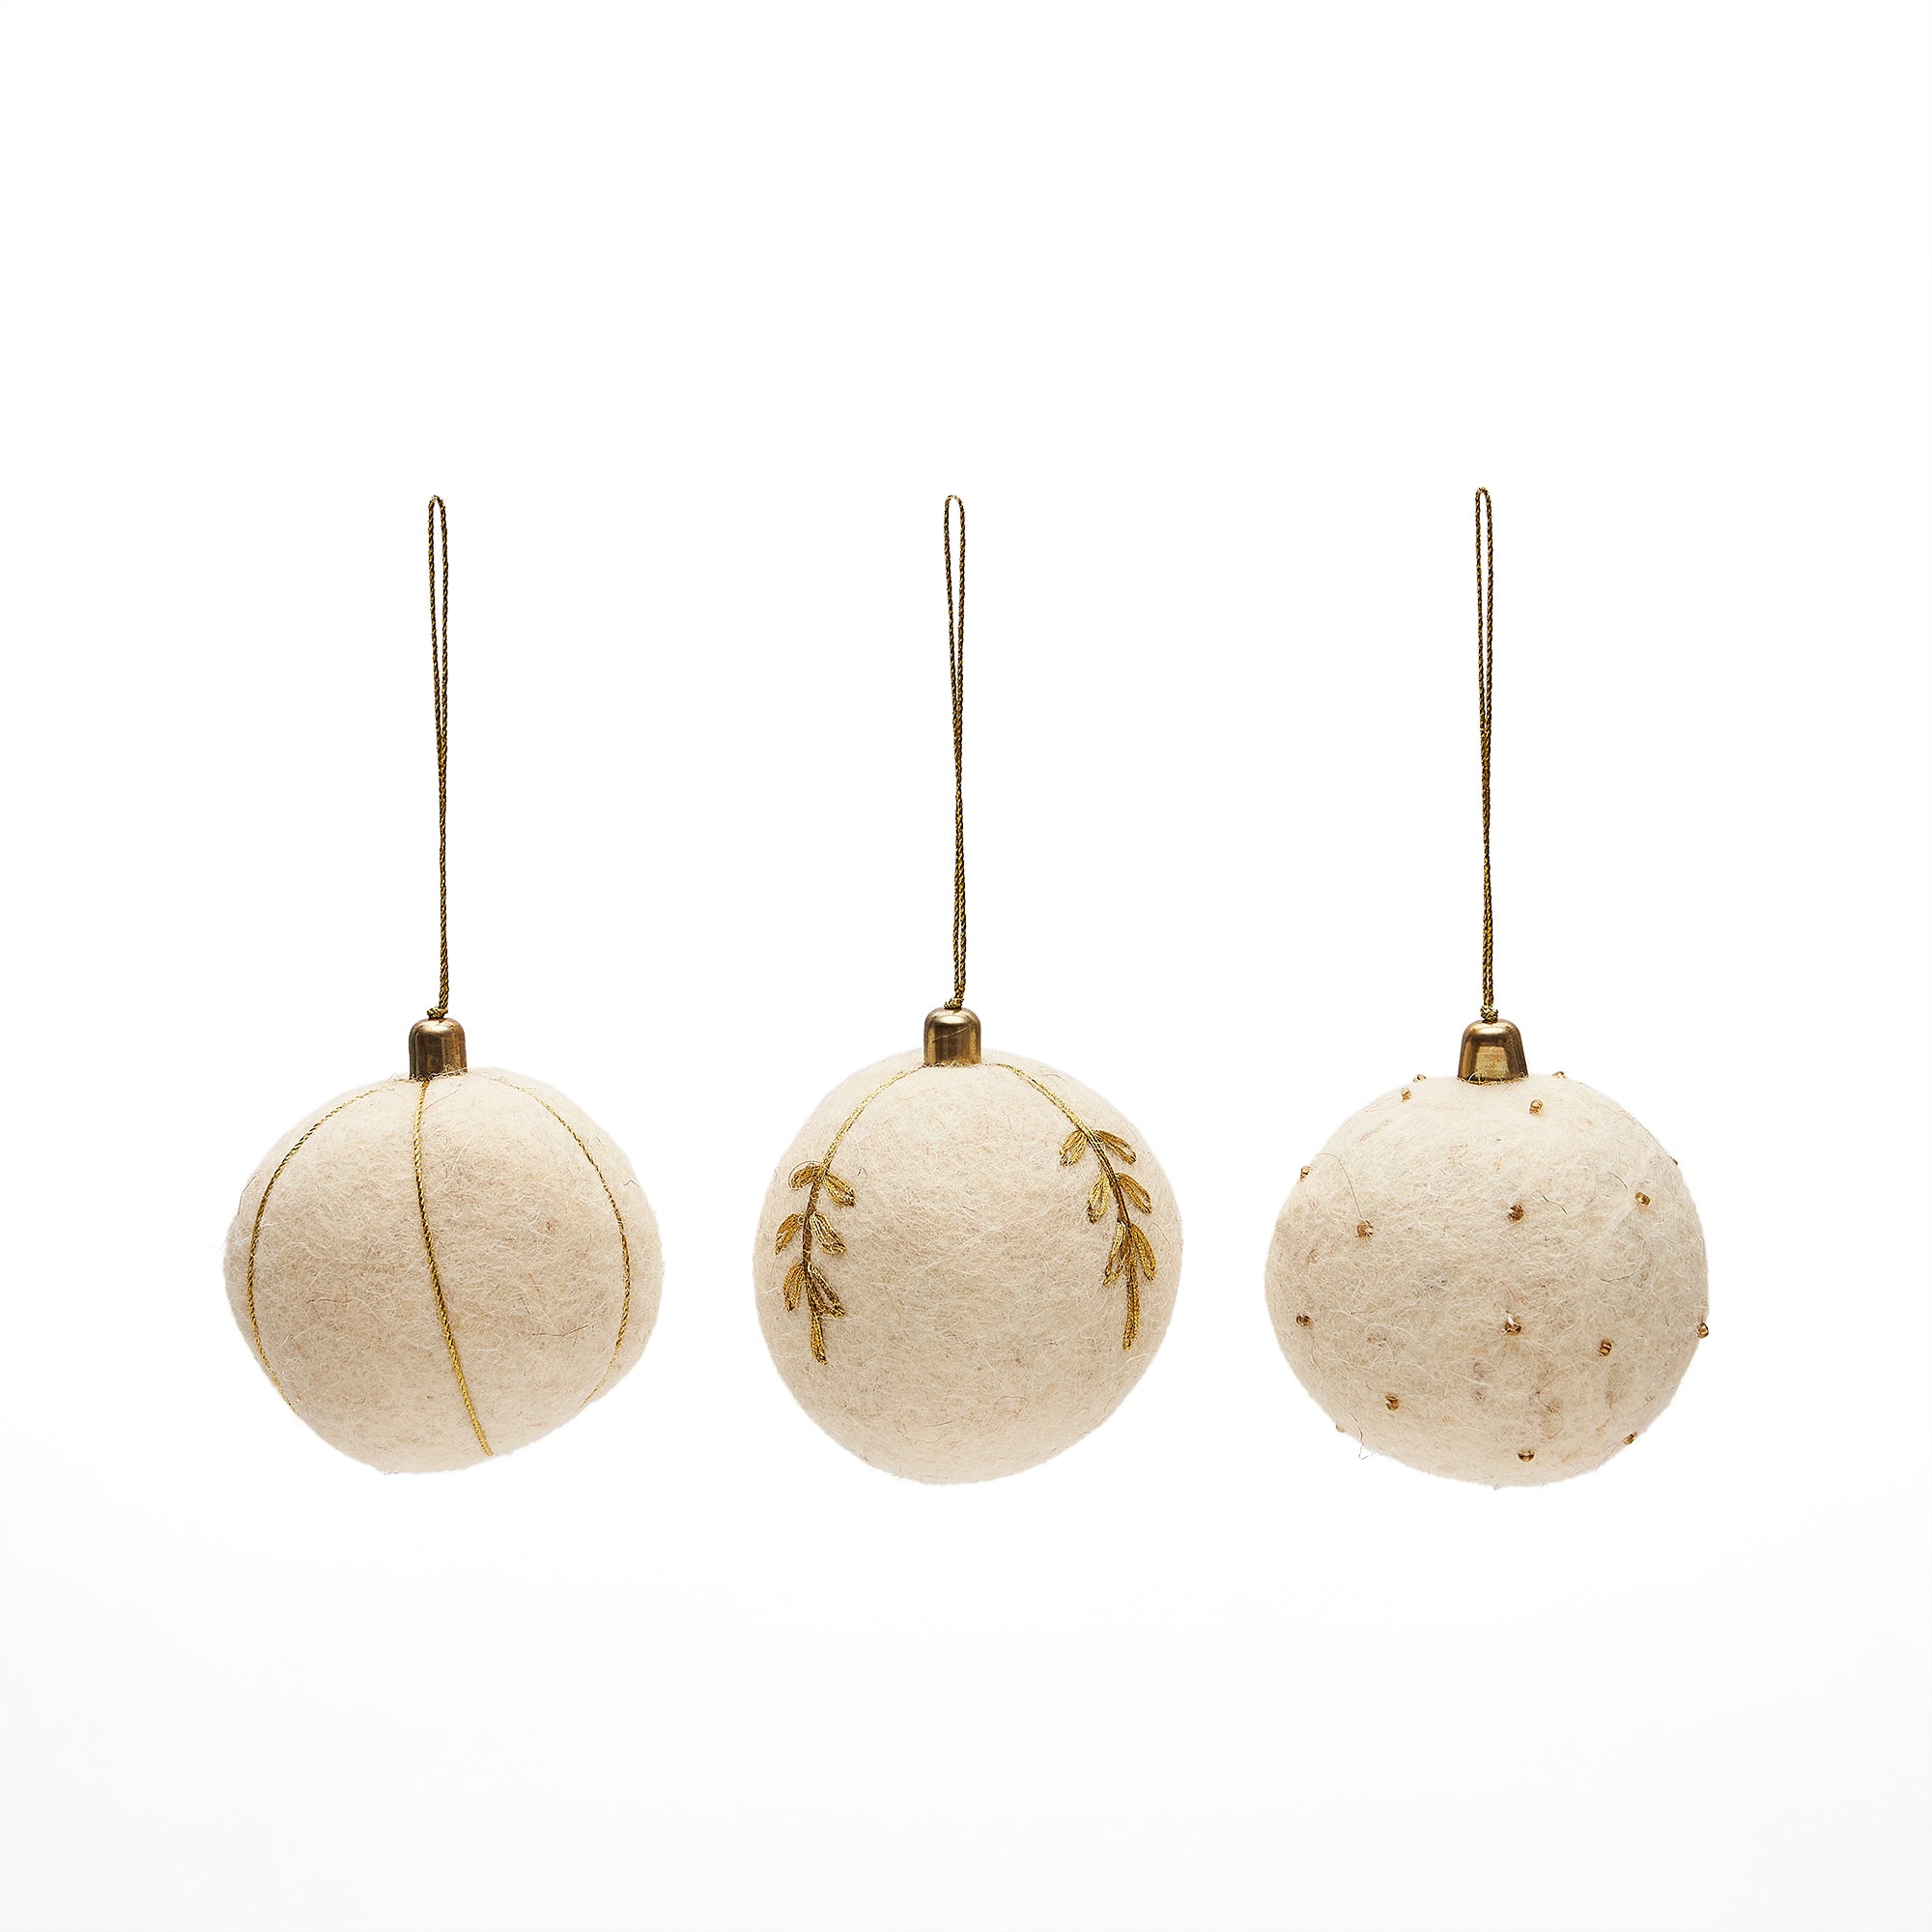 Breshi set of 3 large white decorative pendant balls with gold details 